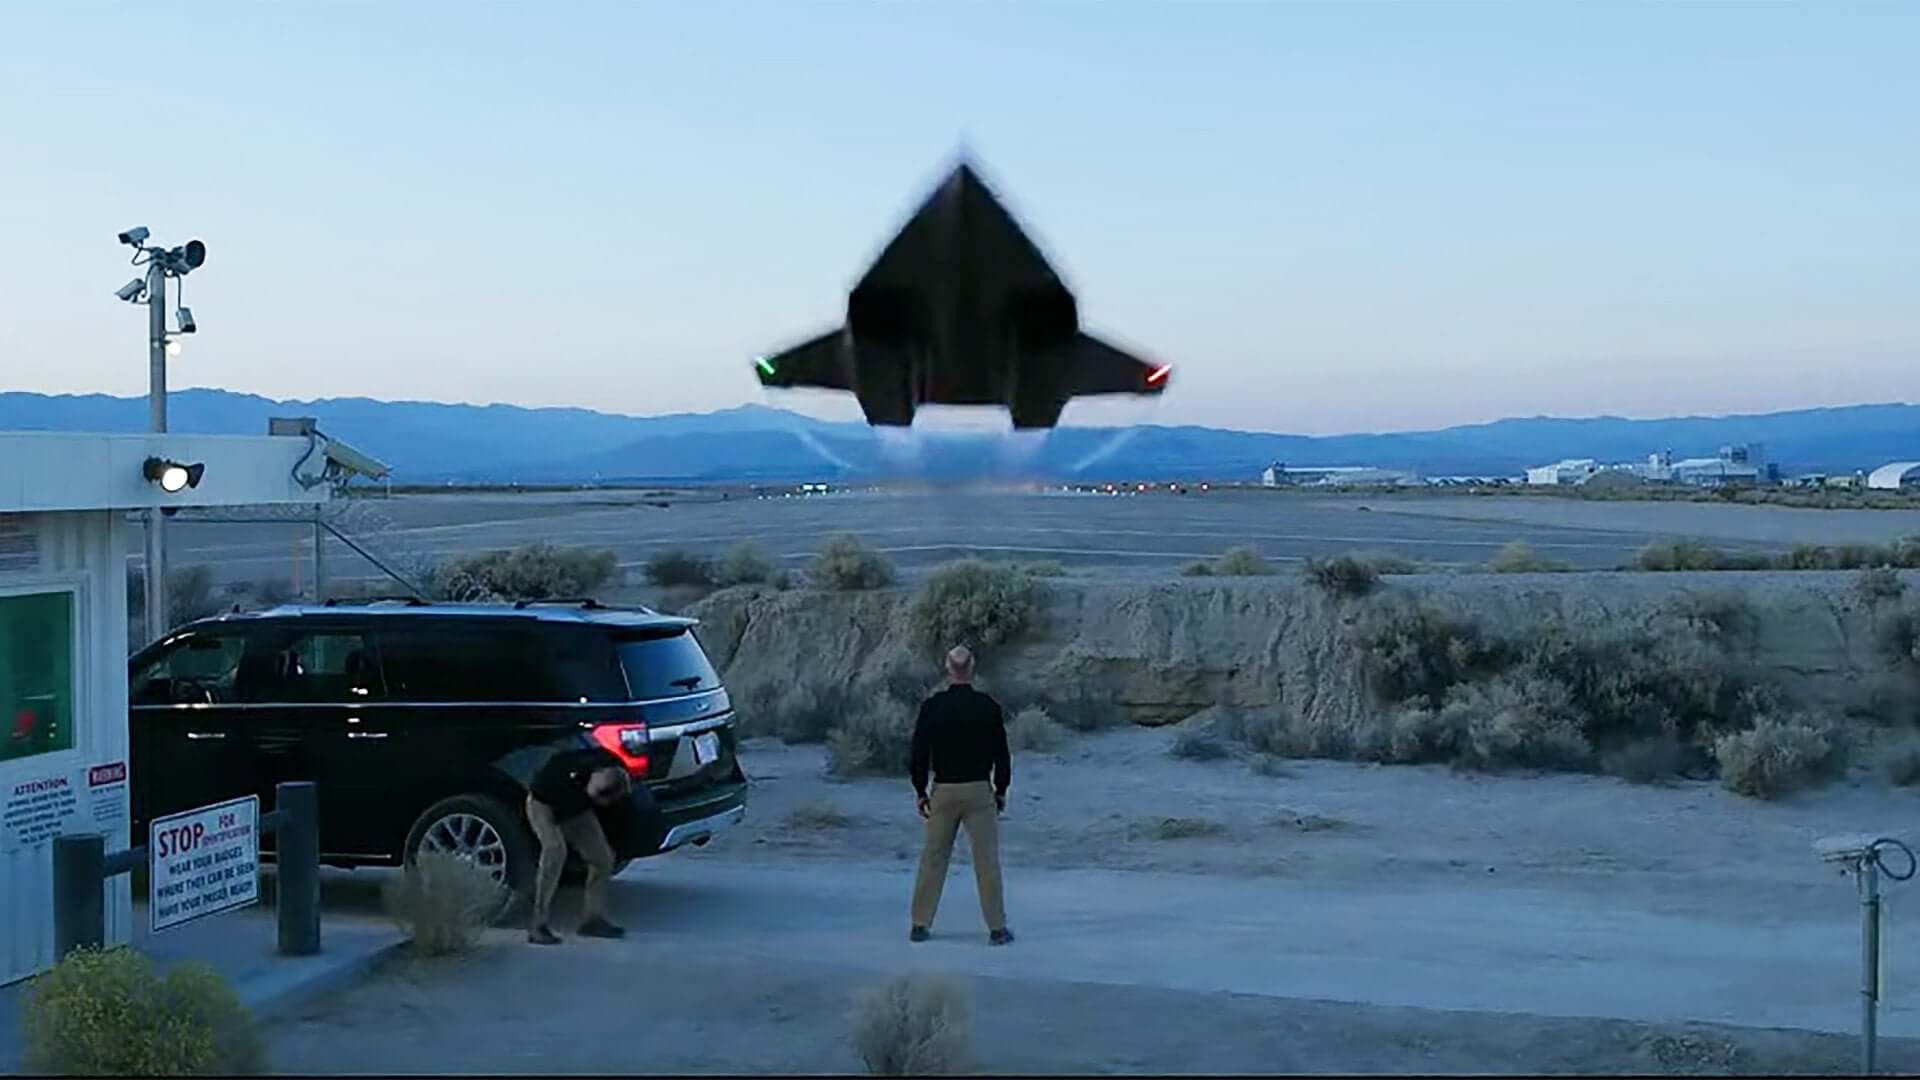 The Darkstar hypersonic jet in Top Gun: Maverick